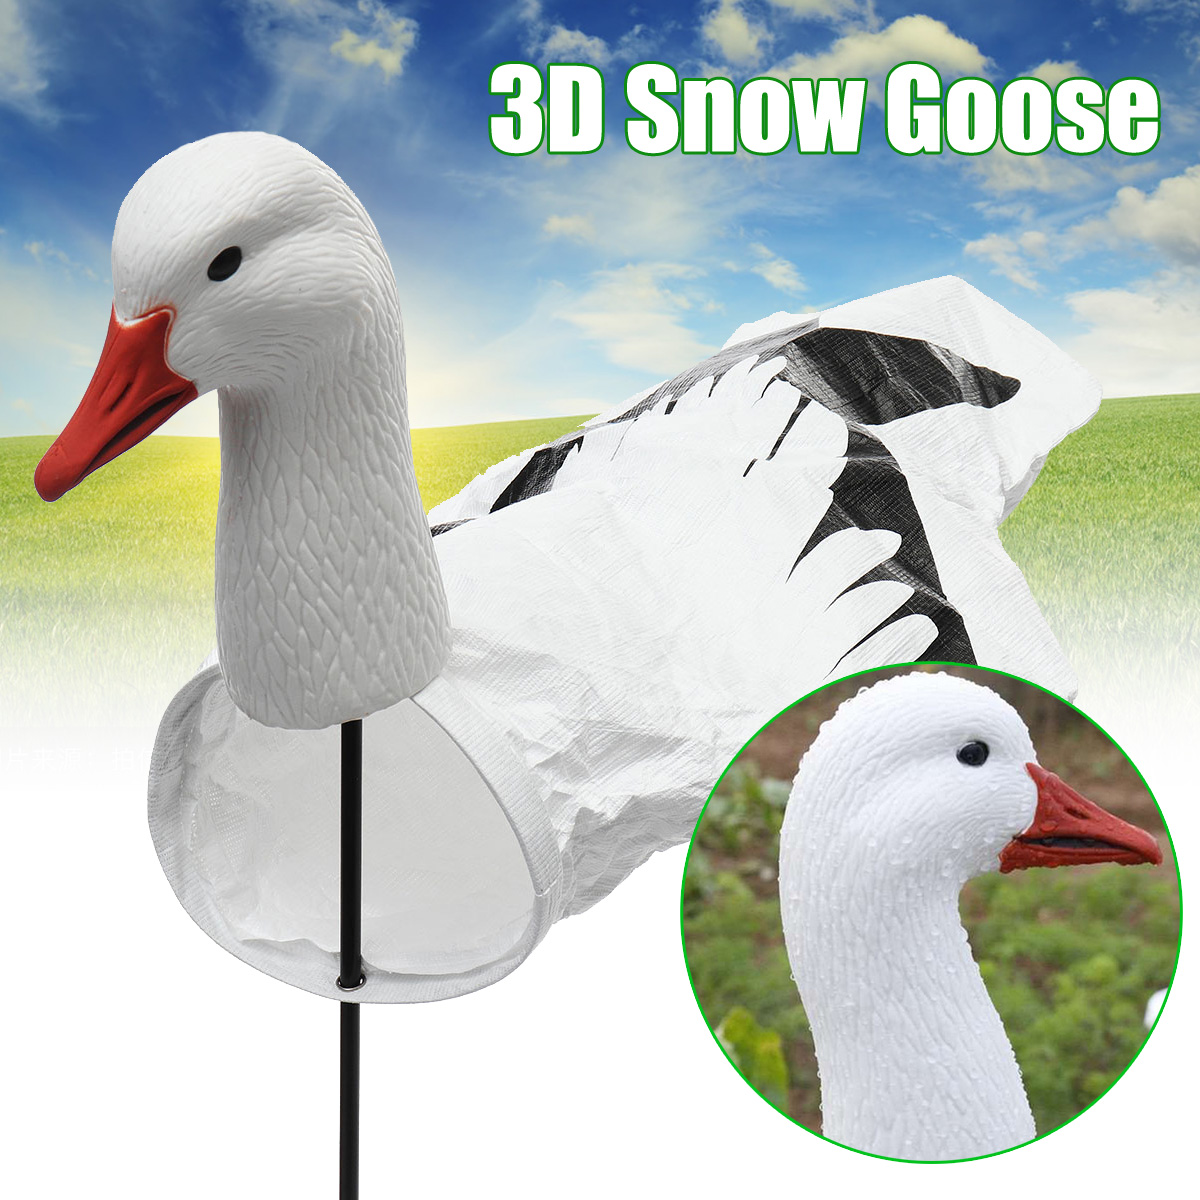 3D-Snow-Goose-Hunting-Decoy-Windsock-Hunting-Garden-Yard-Hunting-Supplies-1400848-1